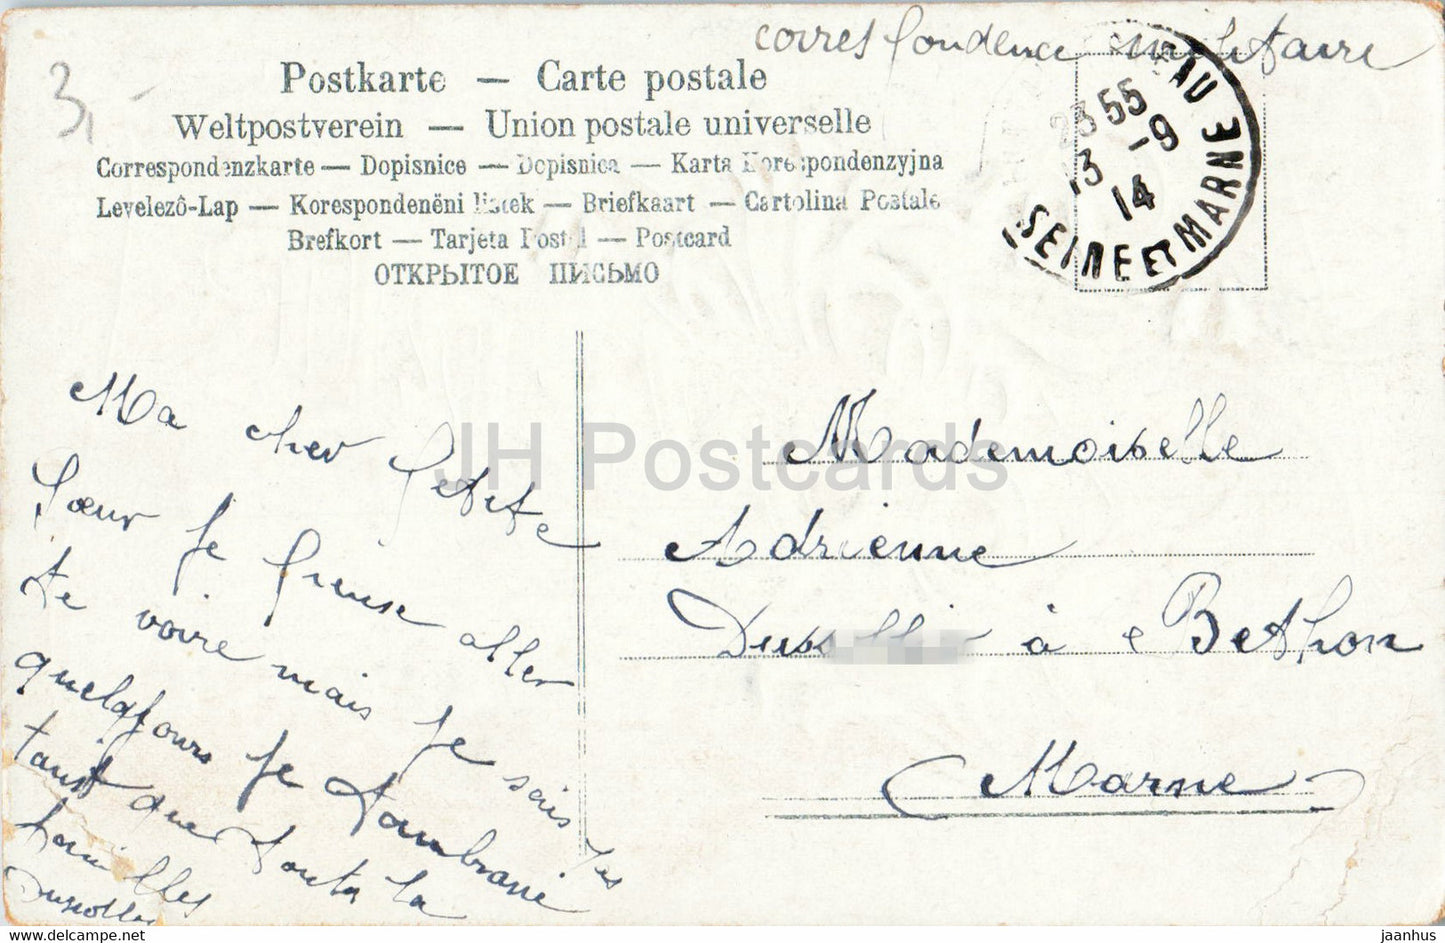 Souvenir de Bayonne - old postcard - 1914 - France - used